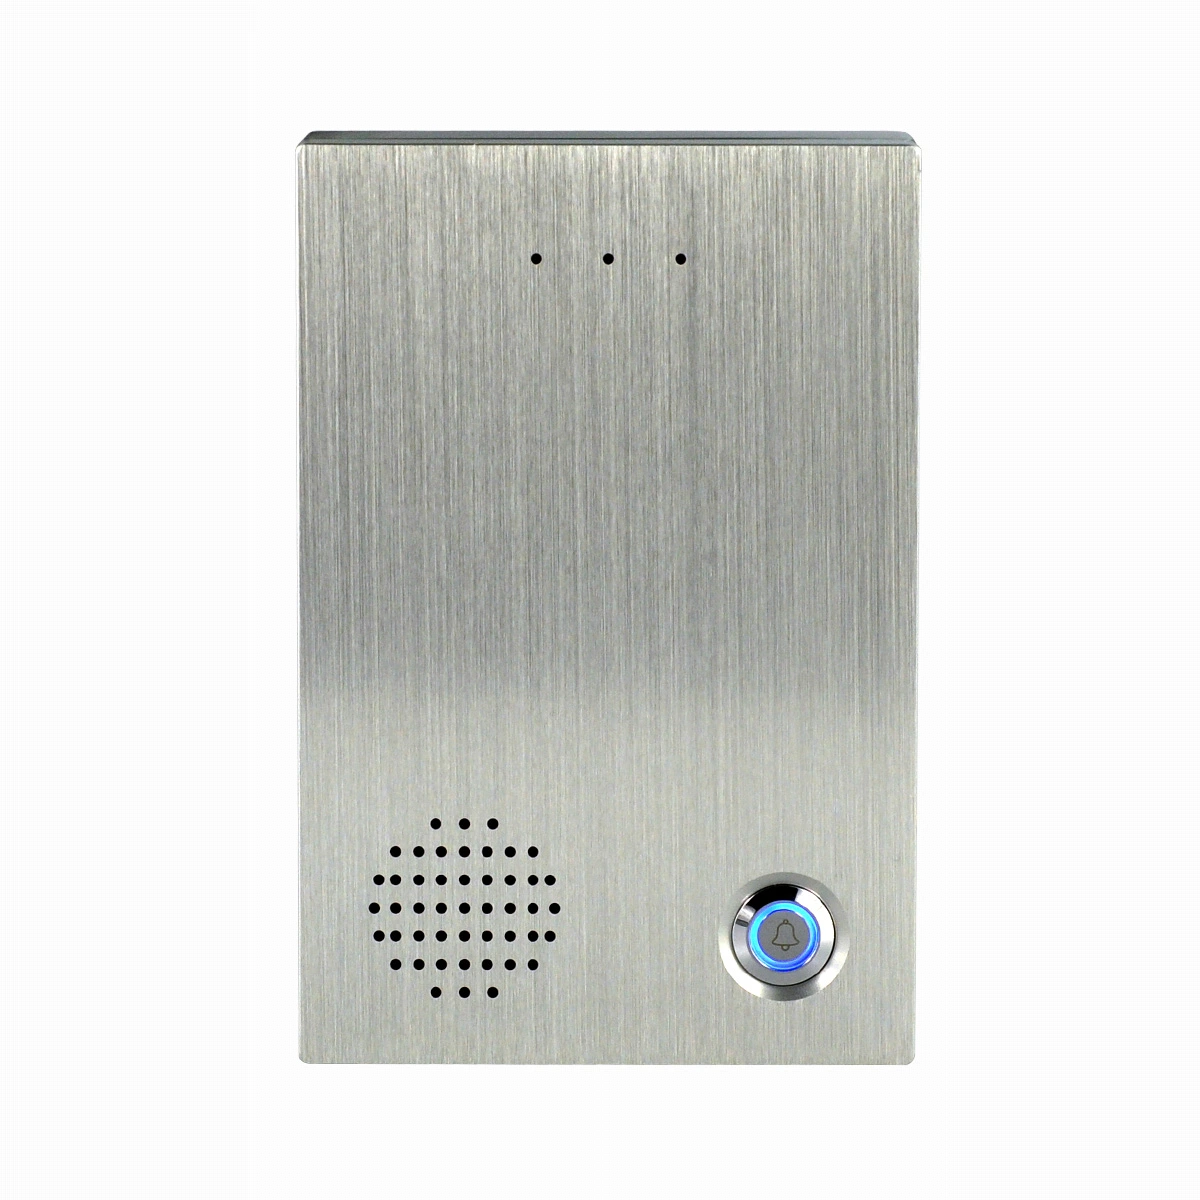 SIP Door Phone with Audio Intercom System for Apartment